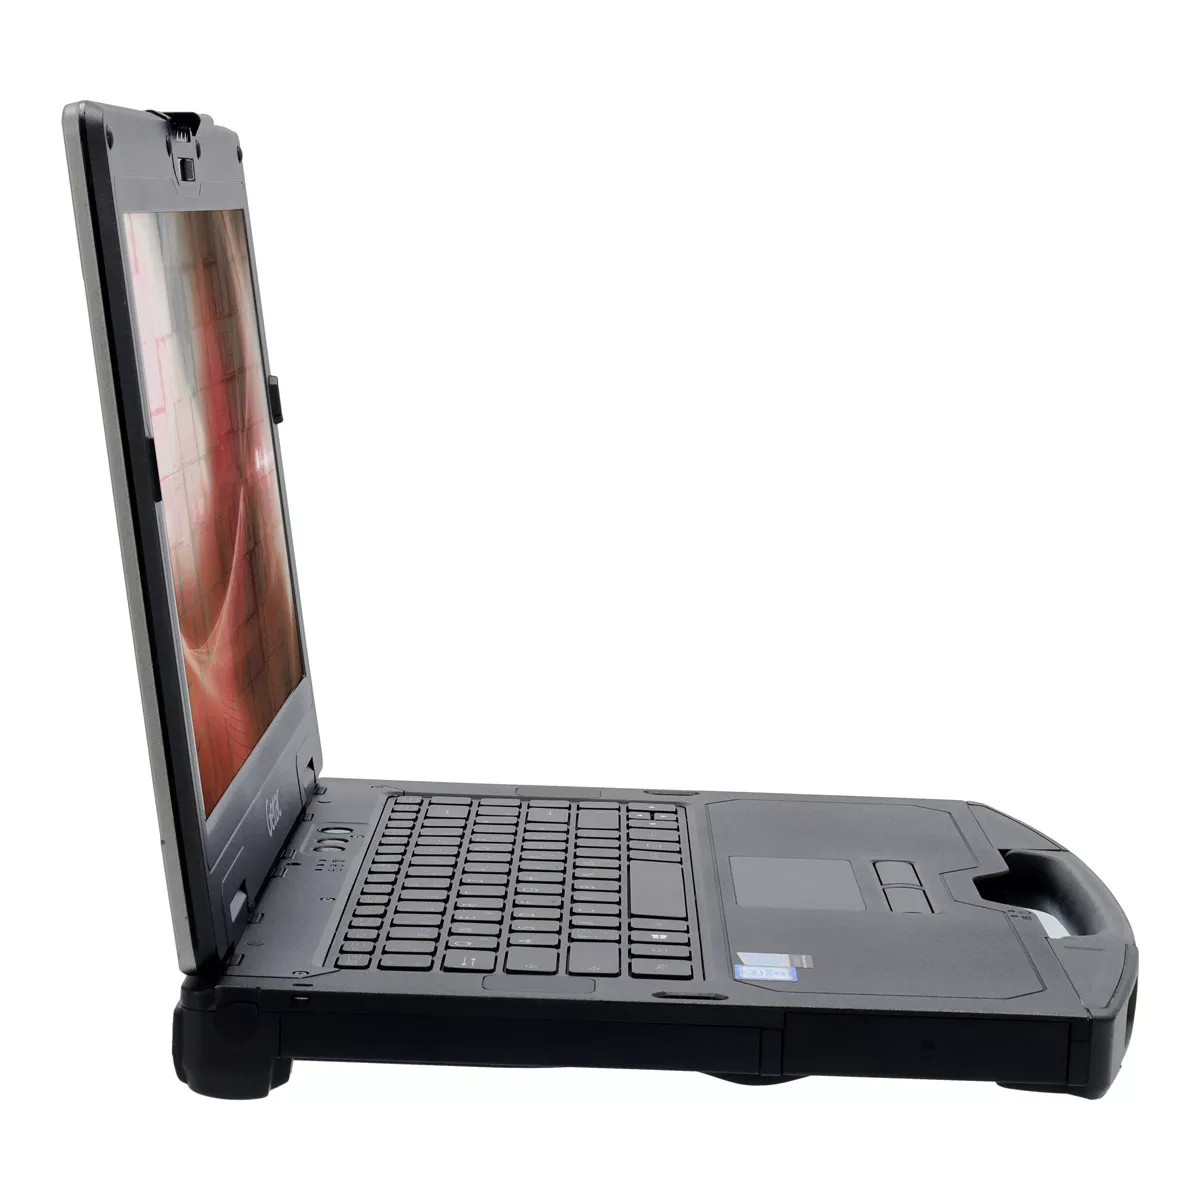 Outdoor Notebook Getac S410G3 Core i5 8365U Full-HD 8 GB 500 GB SSD Webcam B